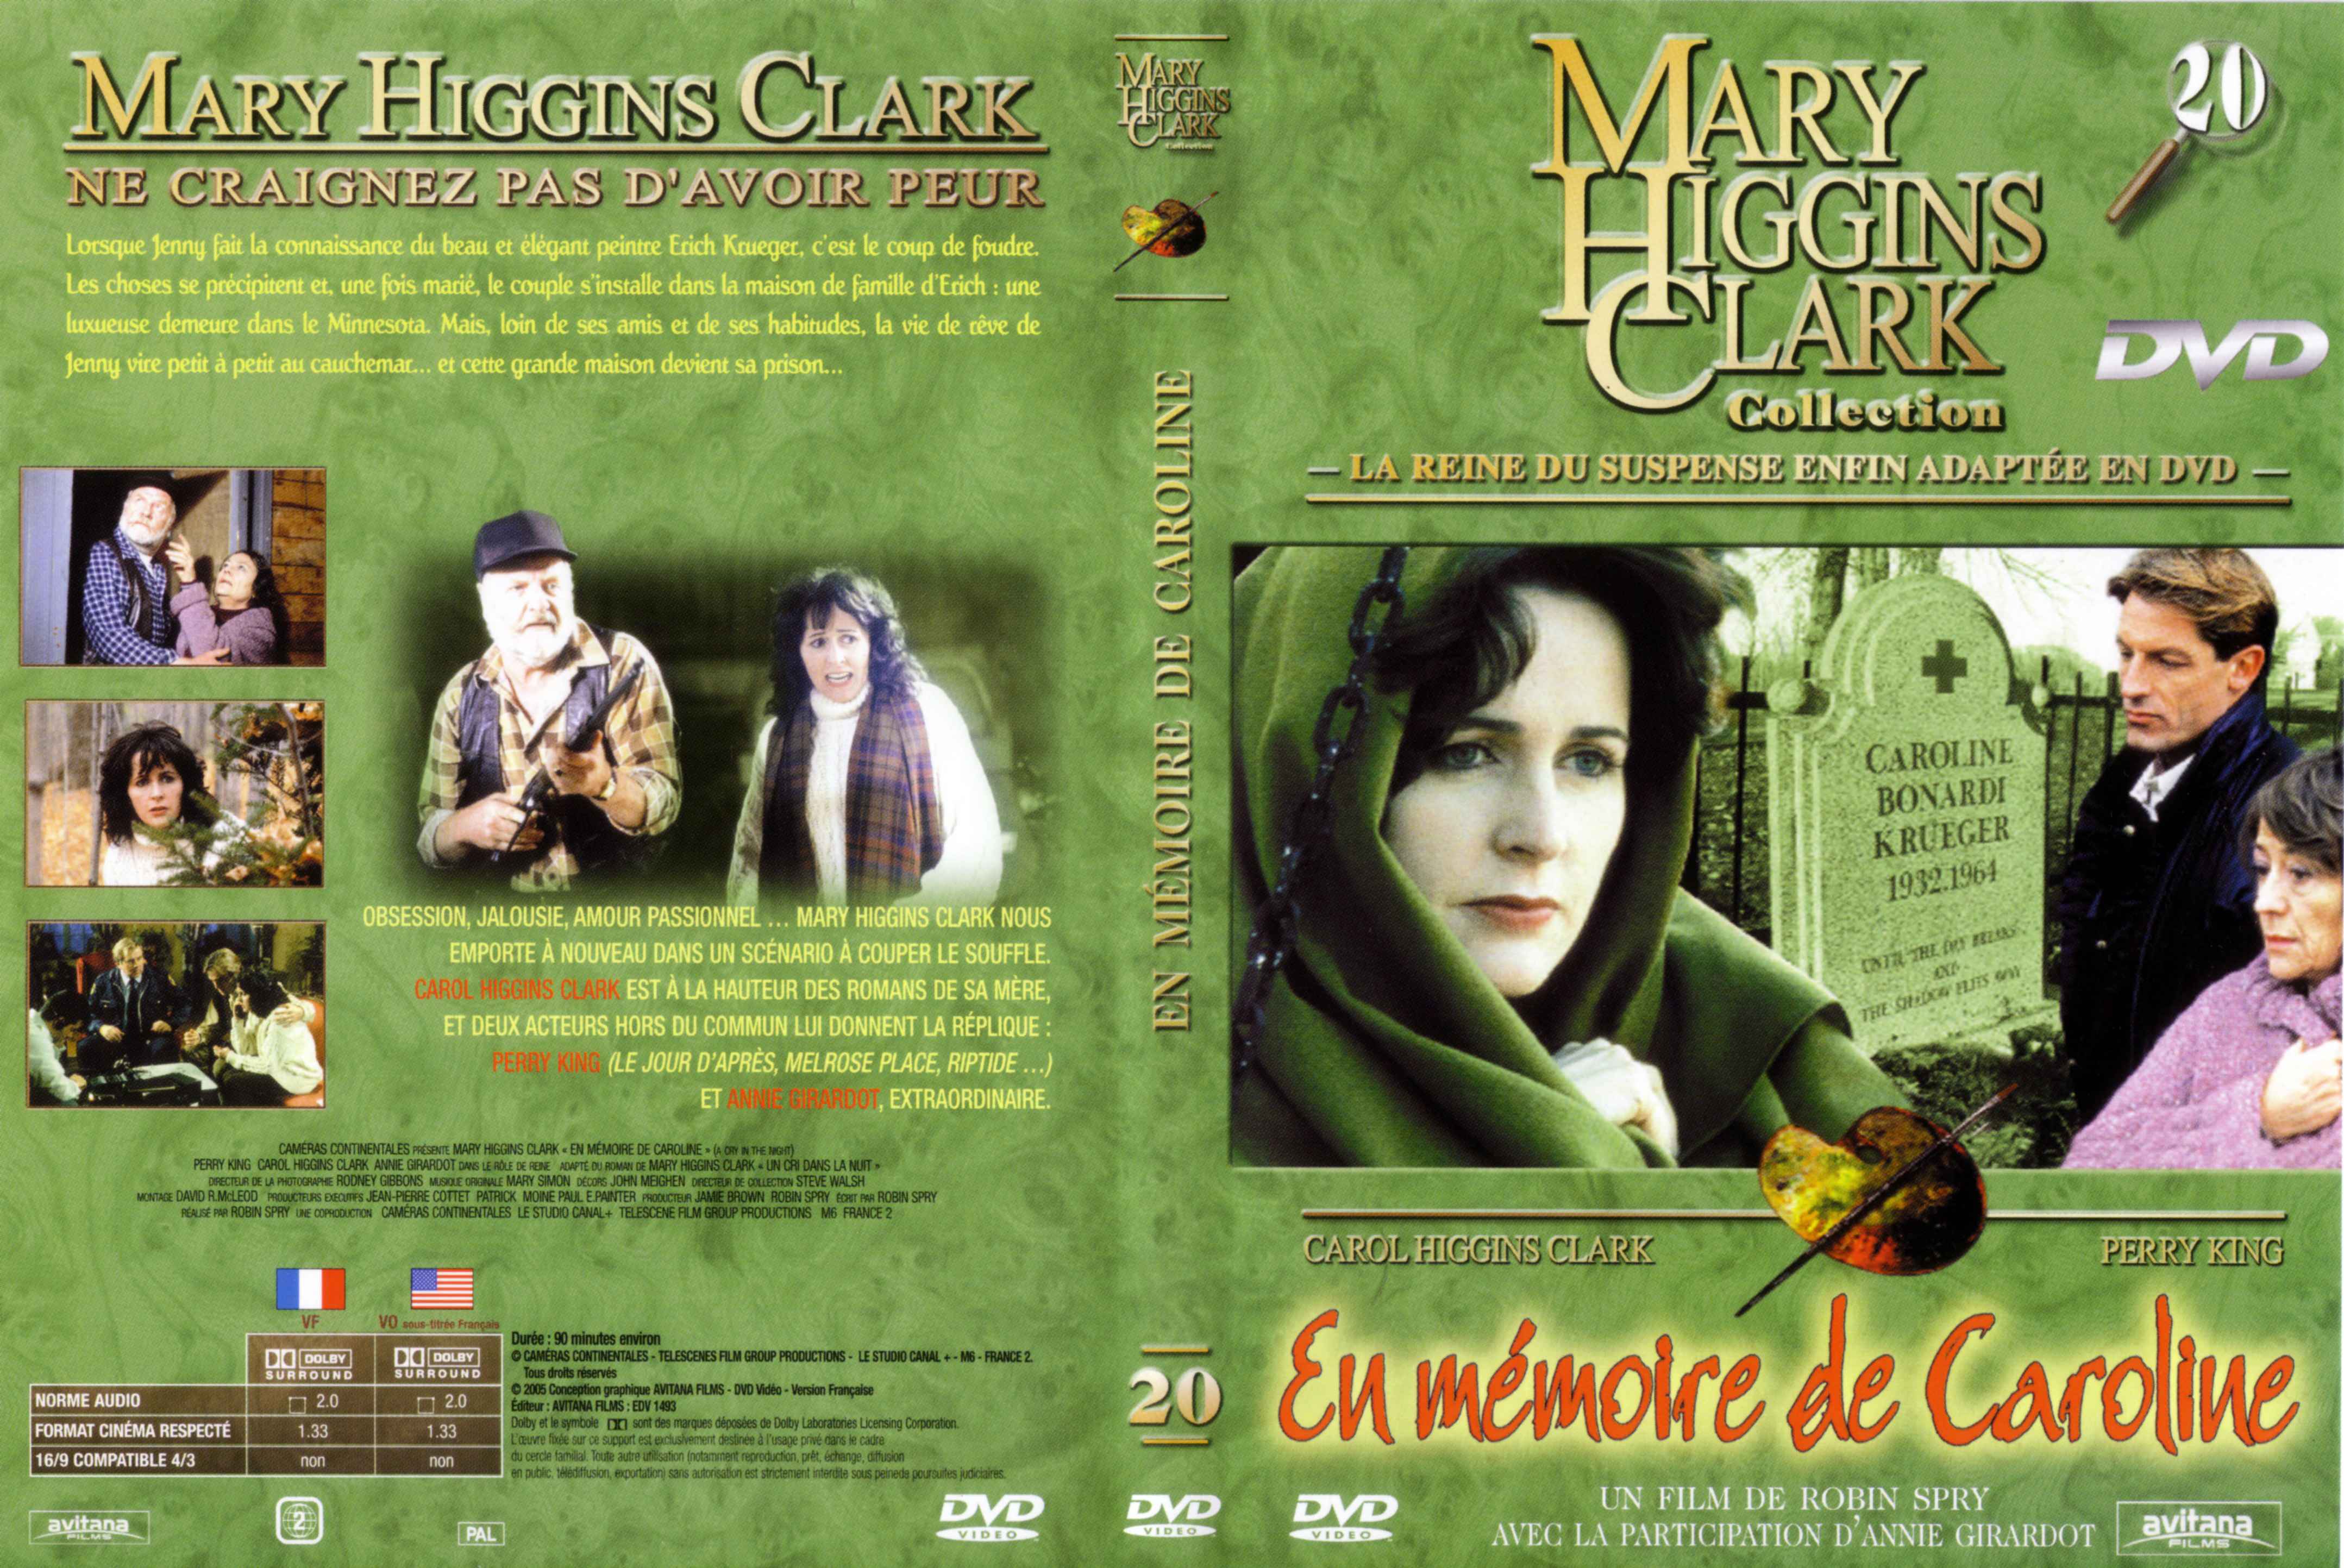 Jaquette DVD Mary Higgins Clark vol 20 - En mmoire de Caroline